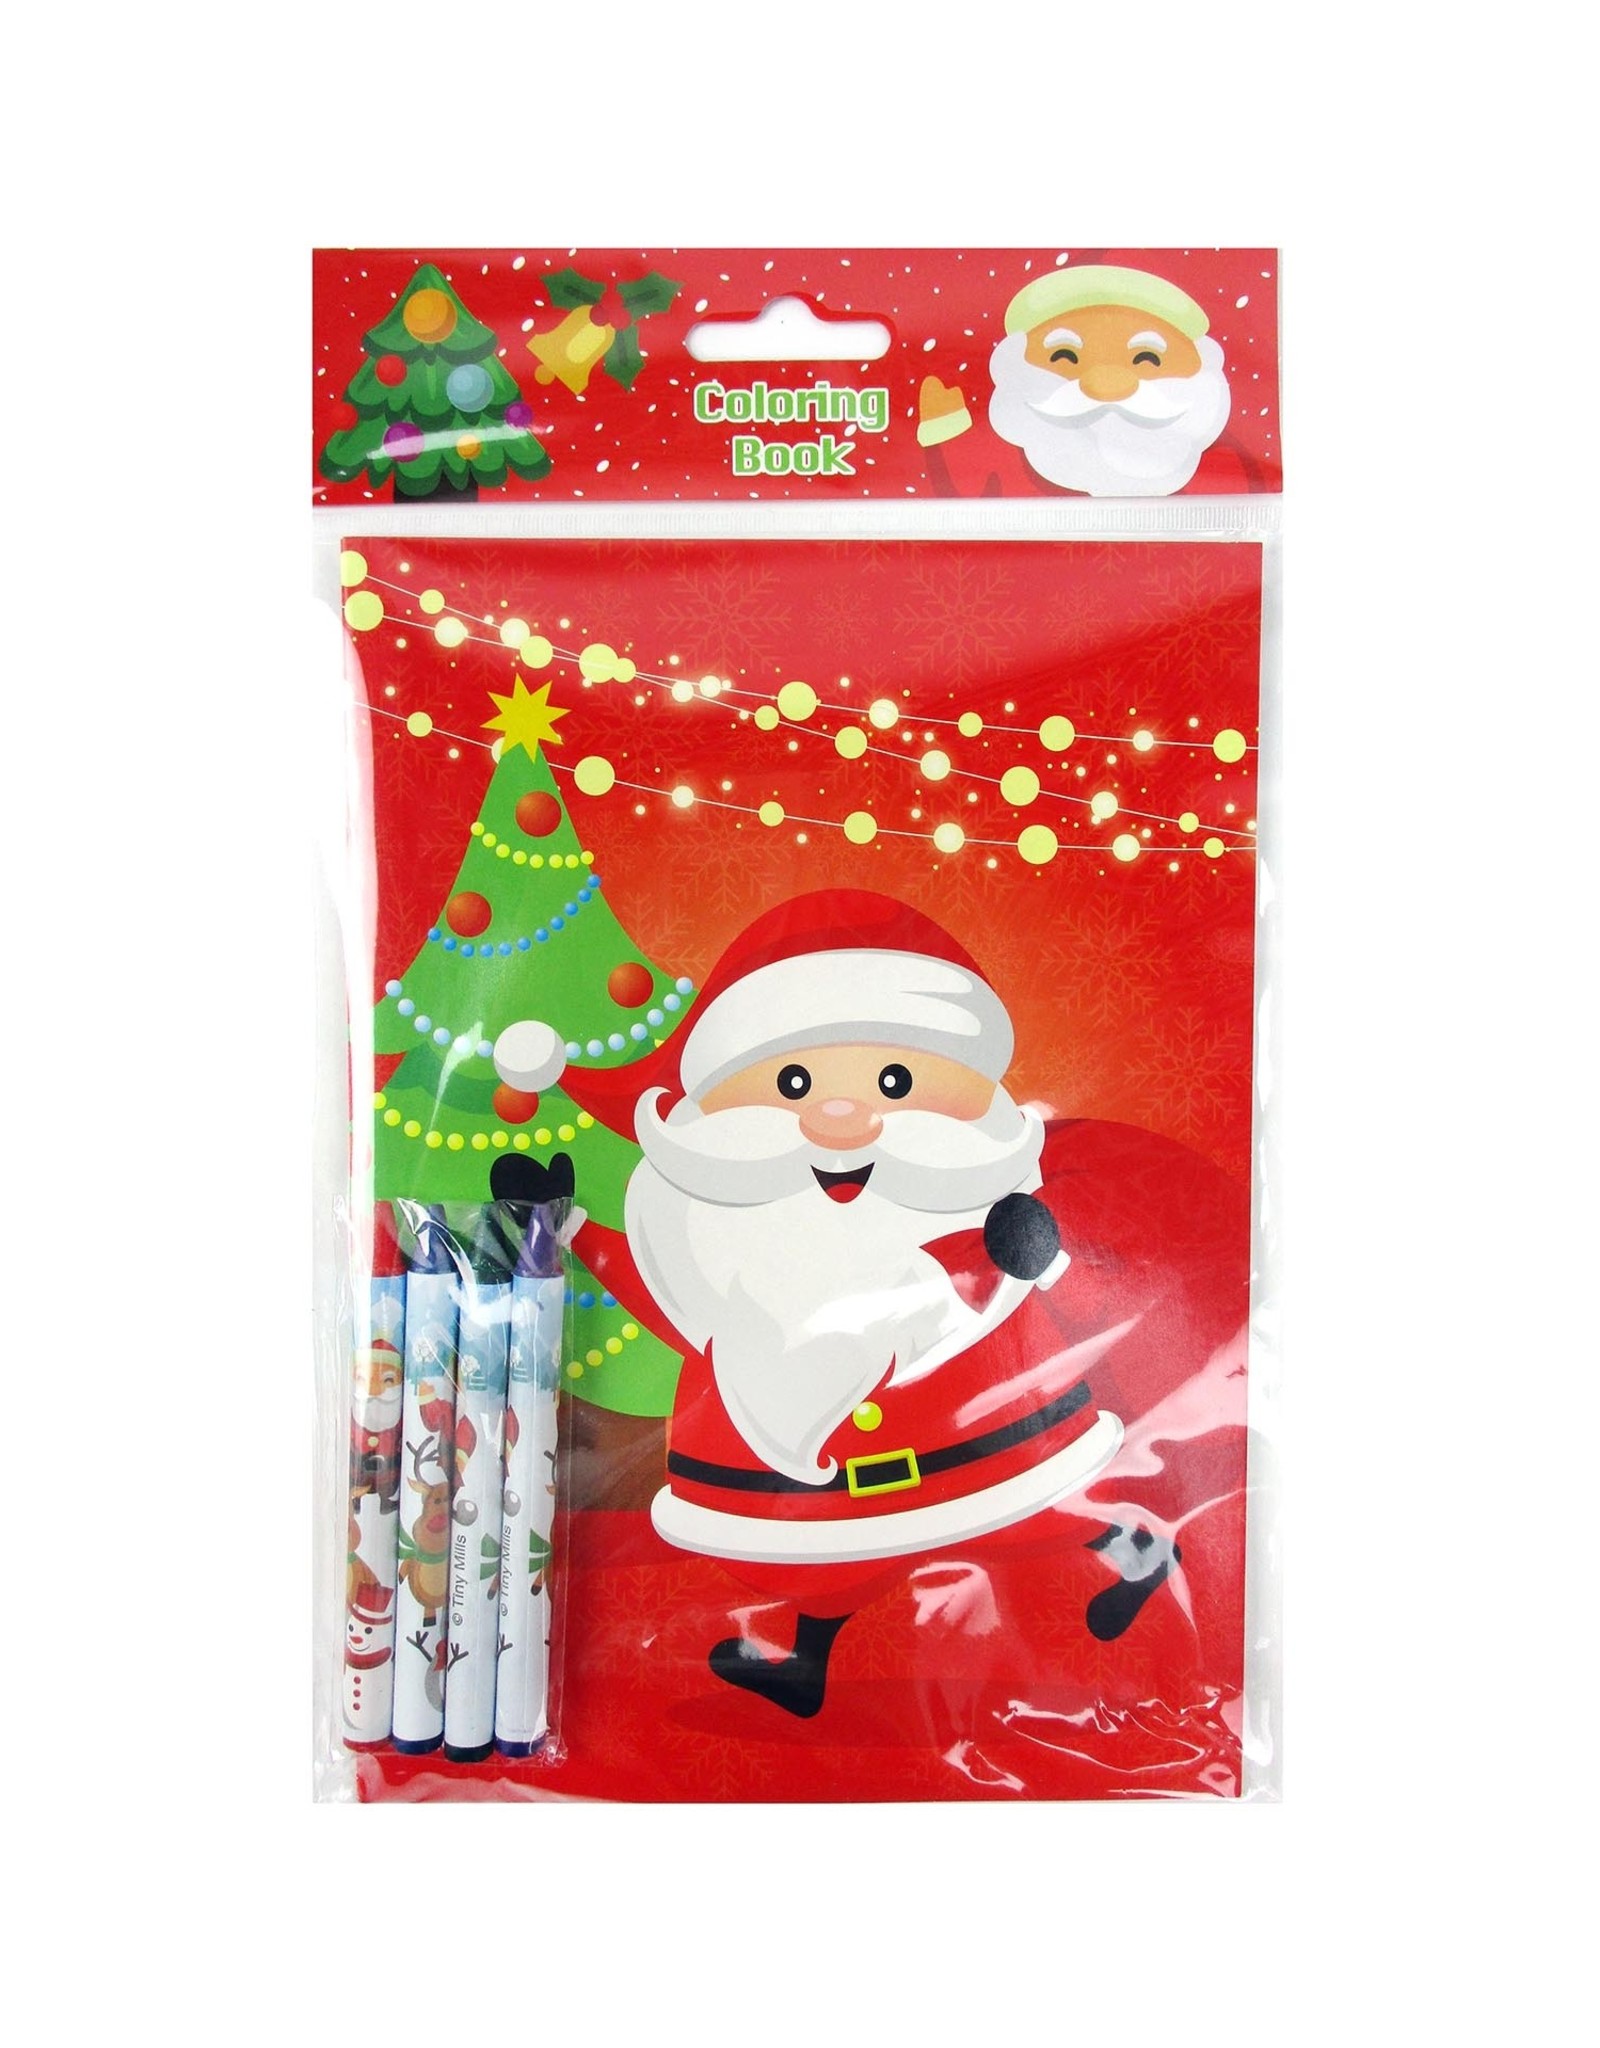 Tiny Mills Christmas Santa Coloring Books with Crayons